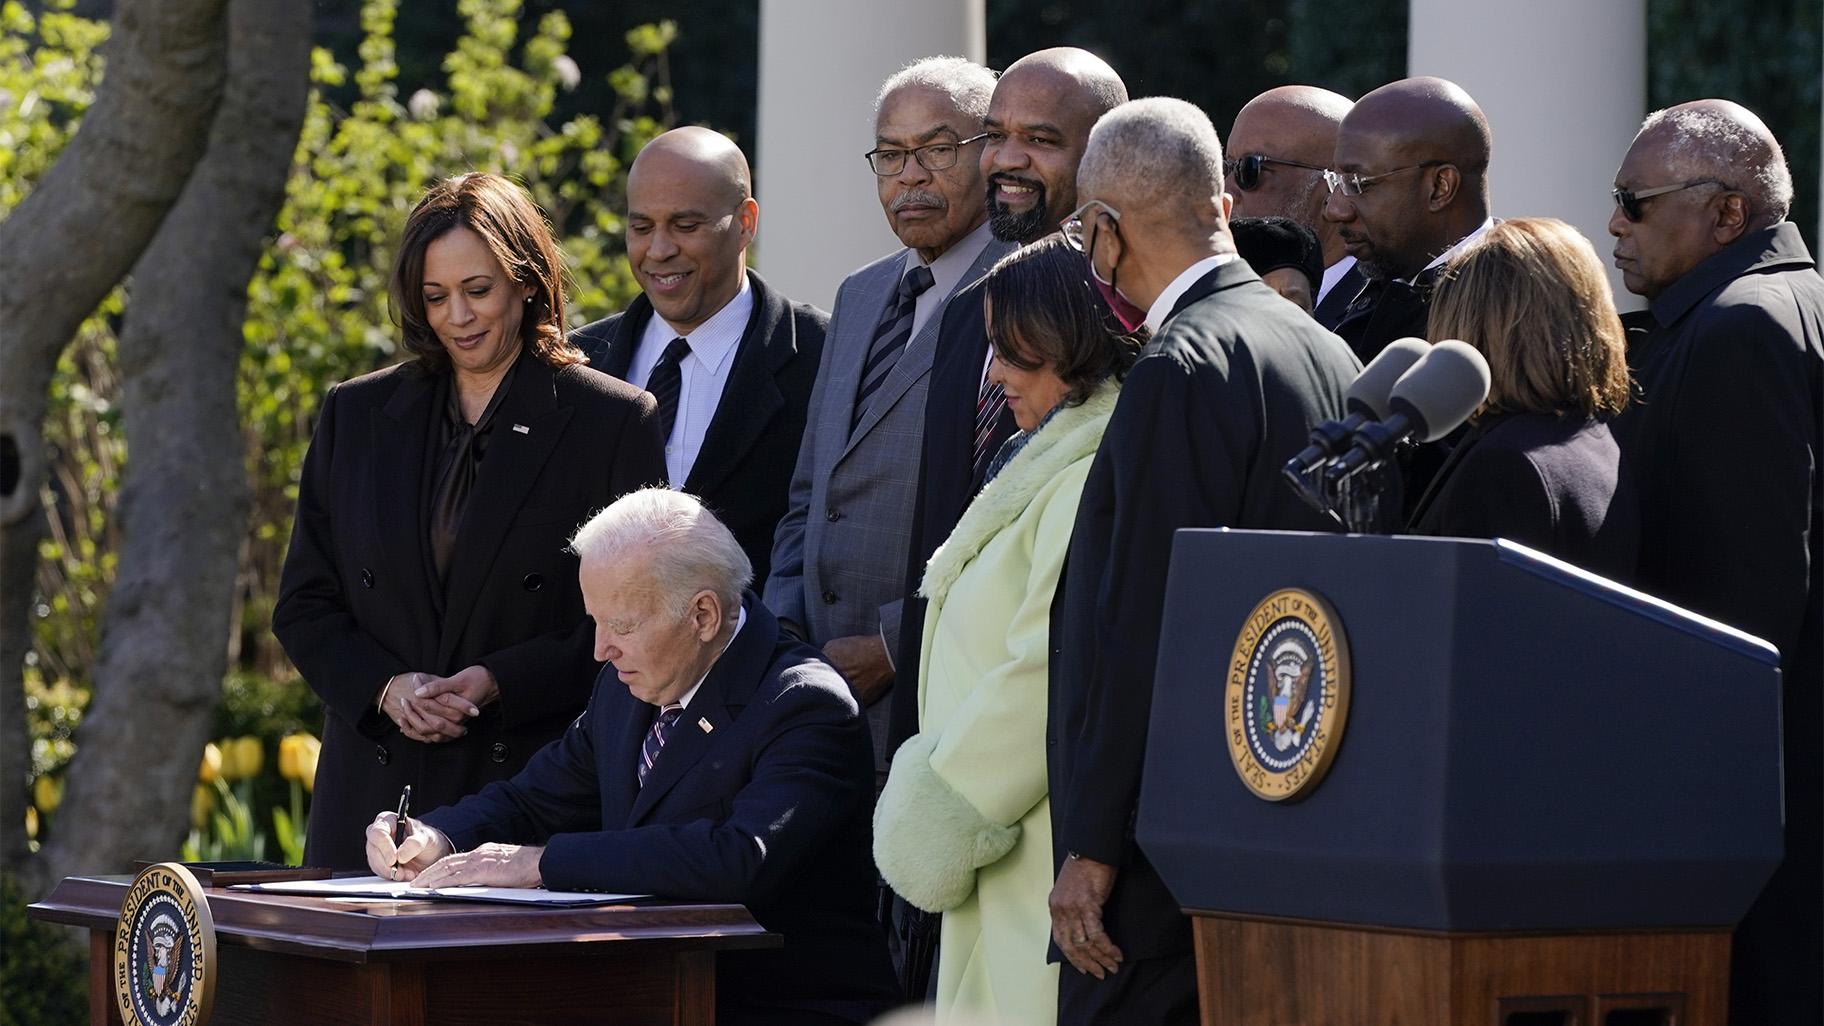 President Joe Biden signs the Emmett Till Anti-Lynching Act in the Rose Garden of the White House, Tuesday, March 29, 2022, in Washington. (AP Photo / Patrick Semansky)